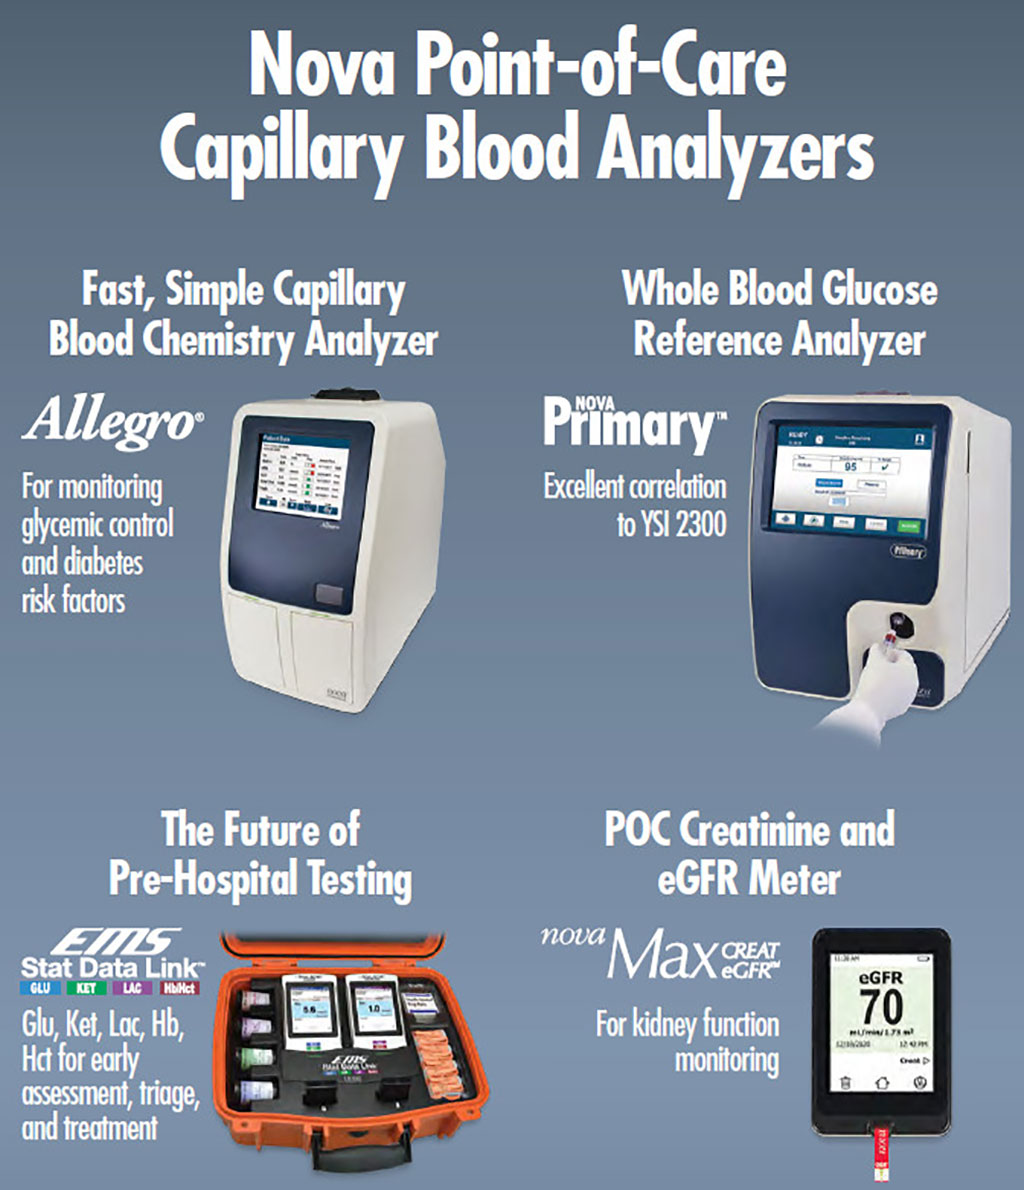 Image: Nova Point-of-Care Capillary Blood Analyzers (Photo courtesy of Nova Biomedical)